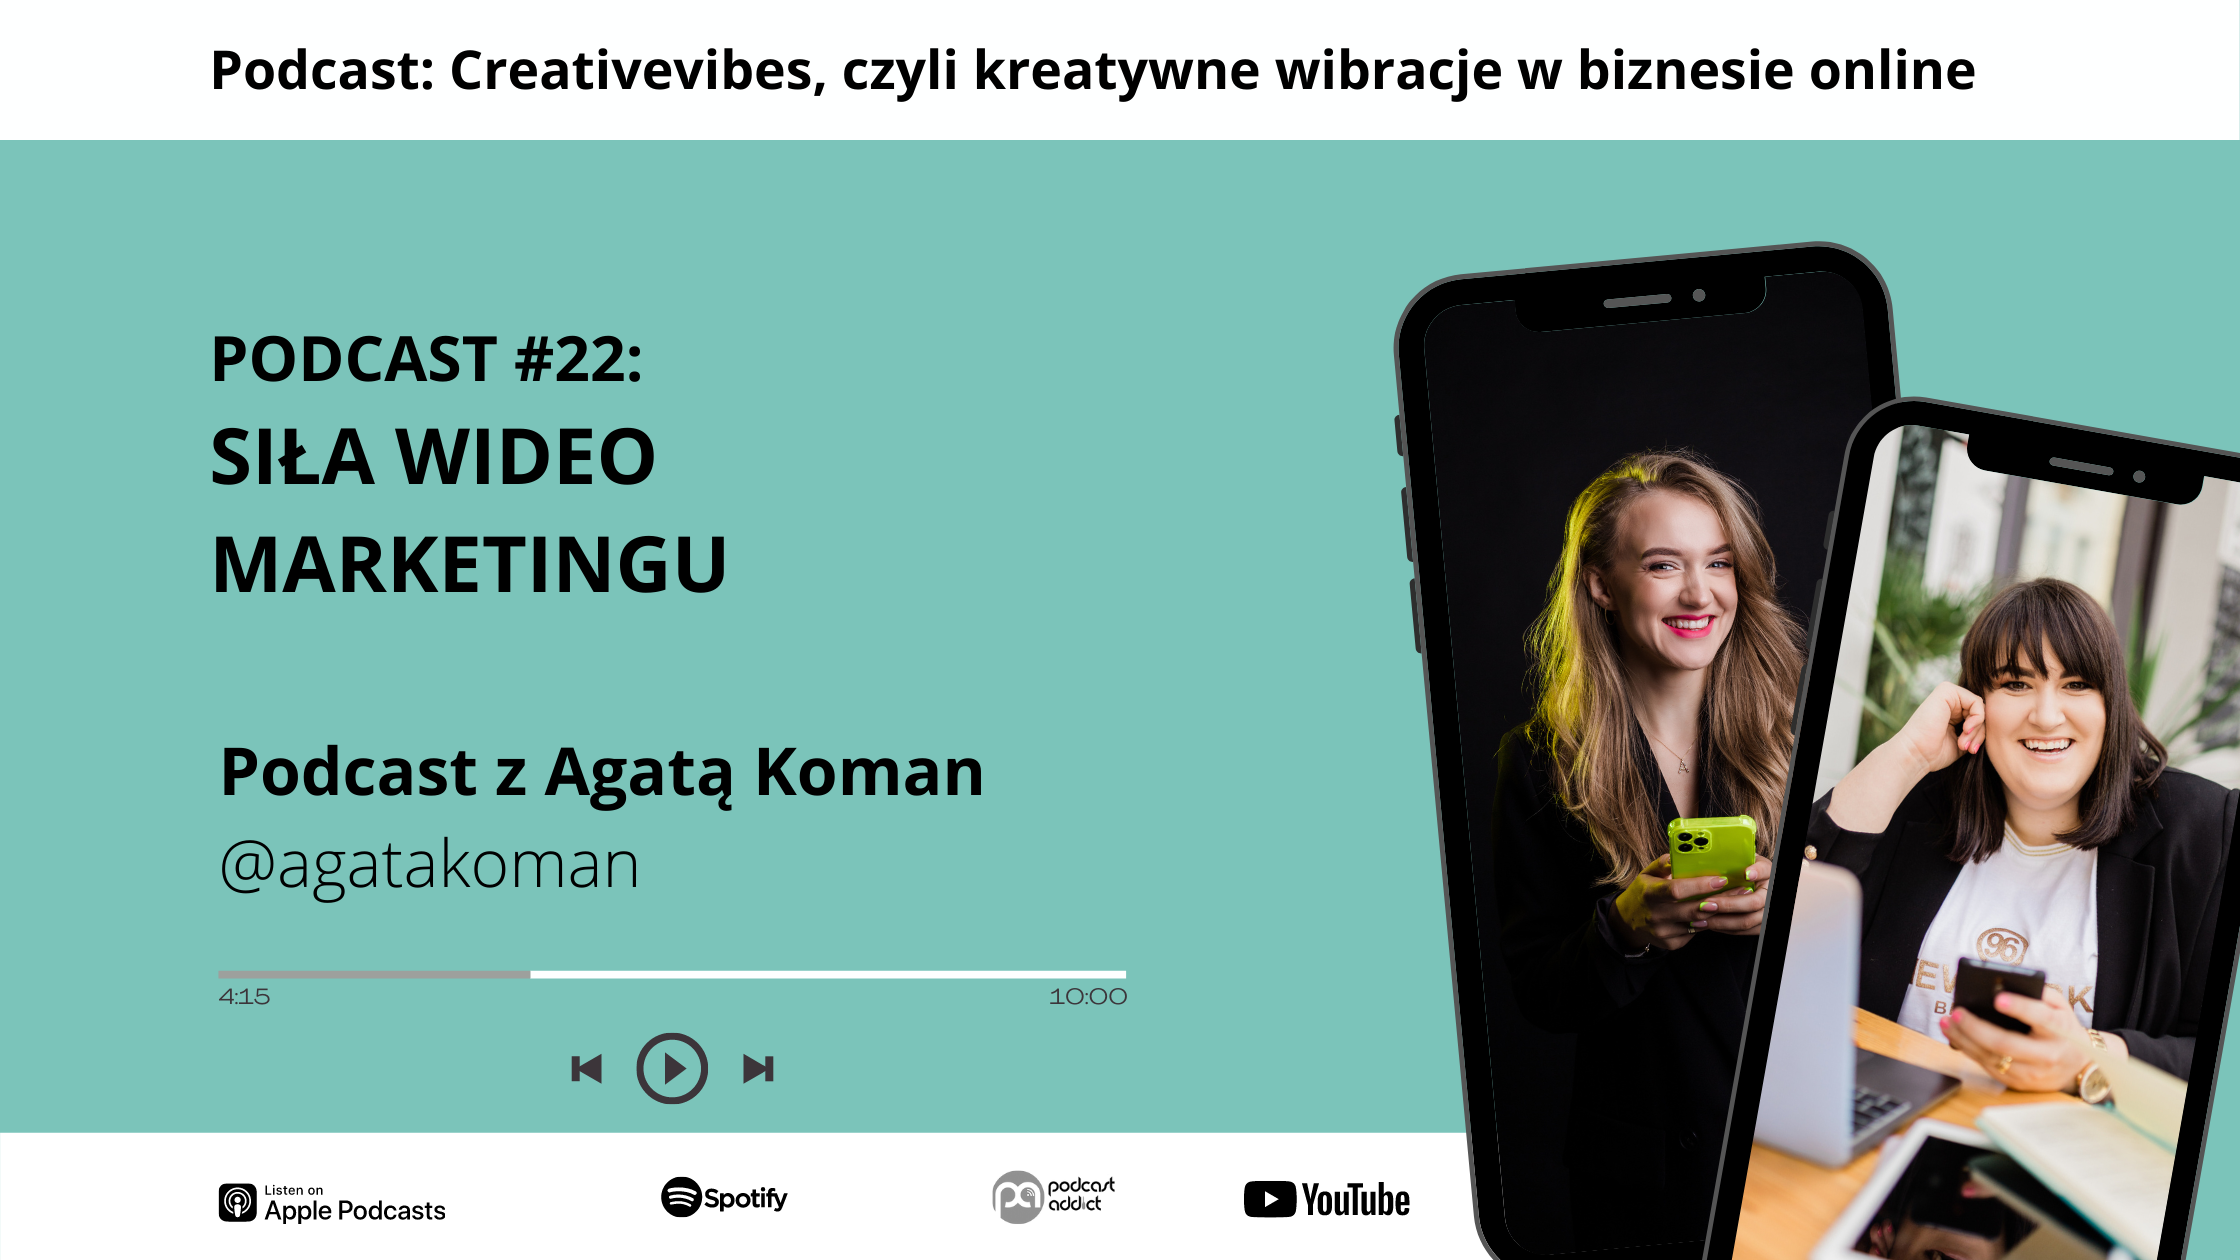 Podcast Creativevibes - Sila wideo marketingu - Agata Koman